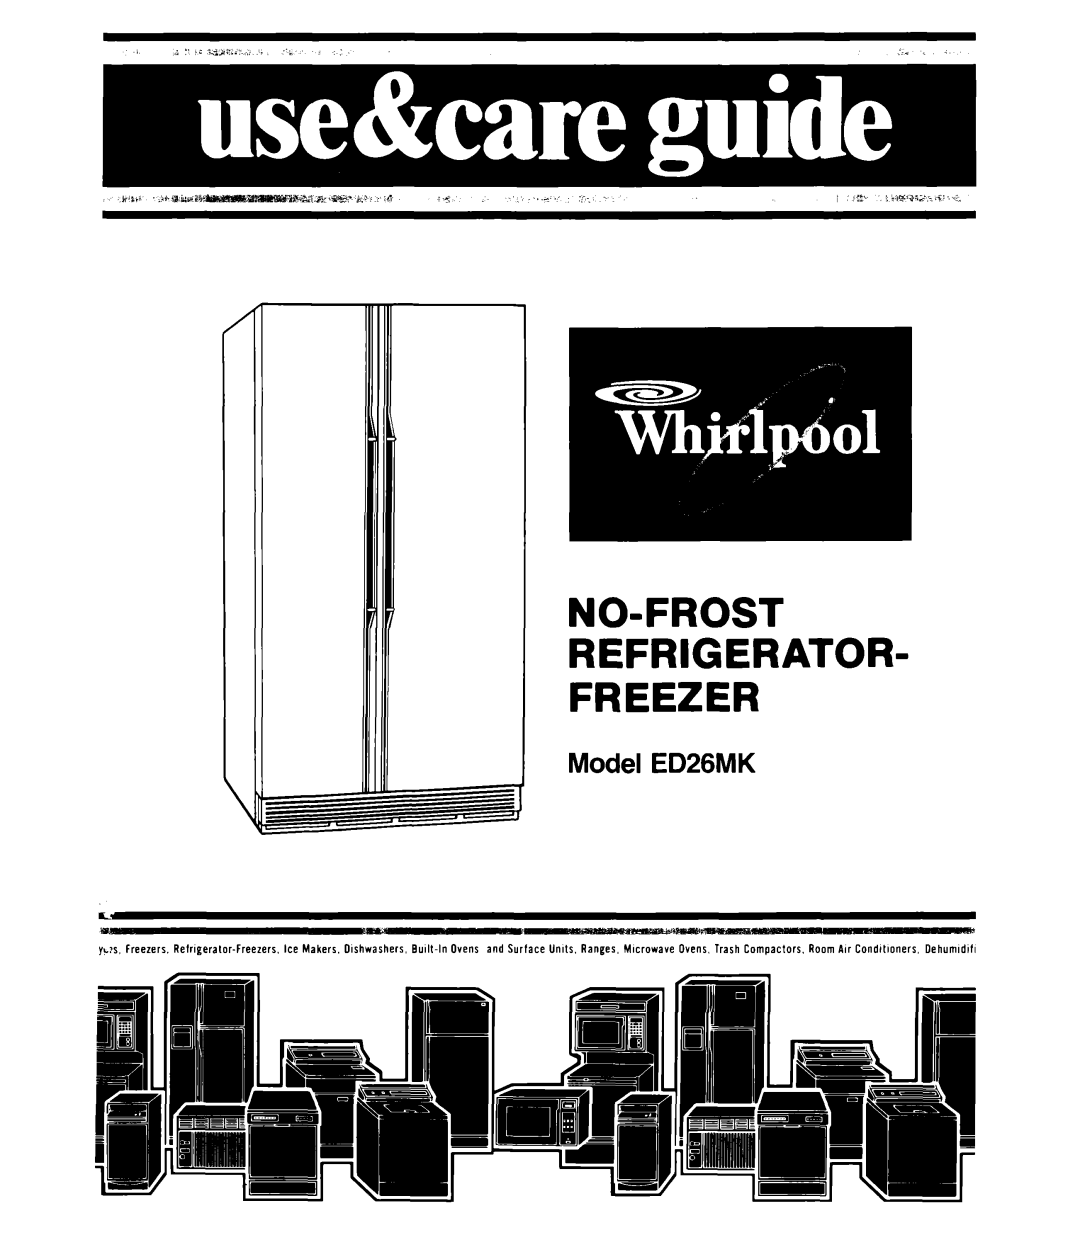 Whirlpool manual No-Frost Refrigerator Freezer, Model ED26MK, y~?s, freezers, Relrlgeralor-Freezers, Ice Makers 